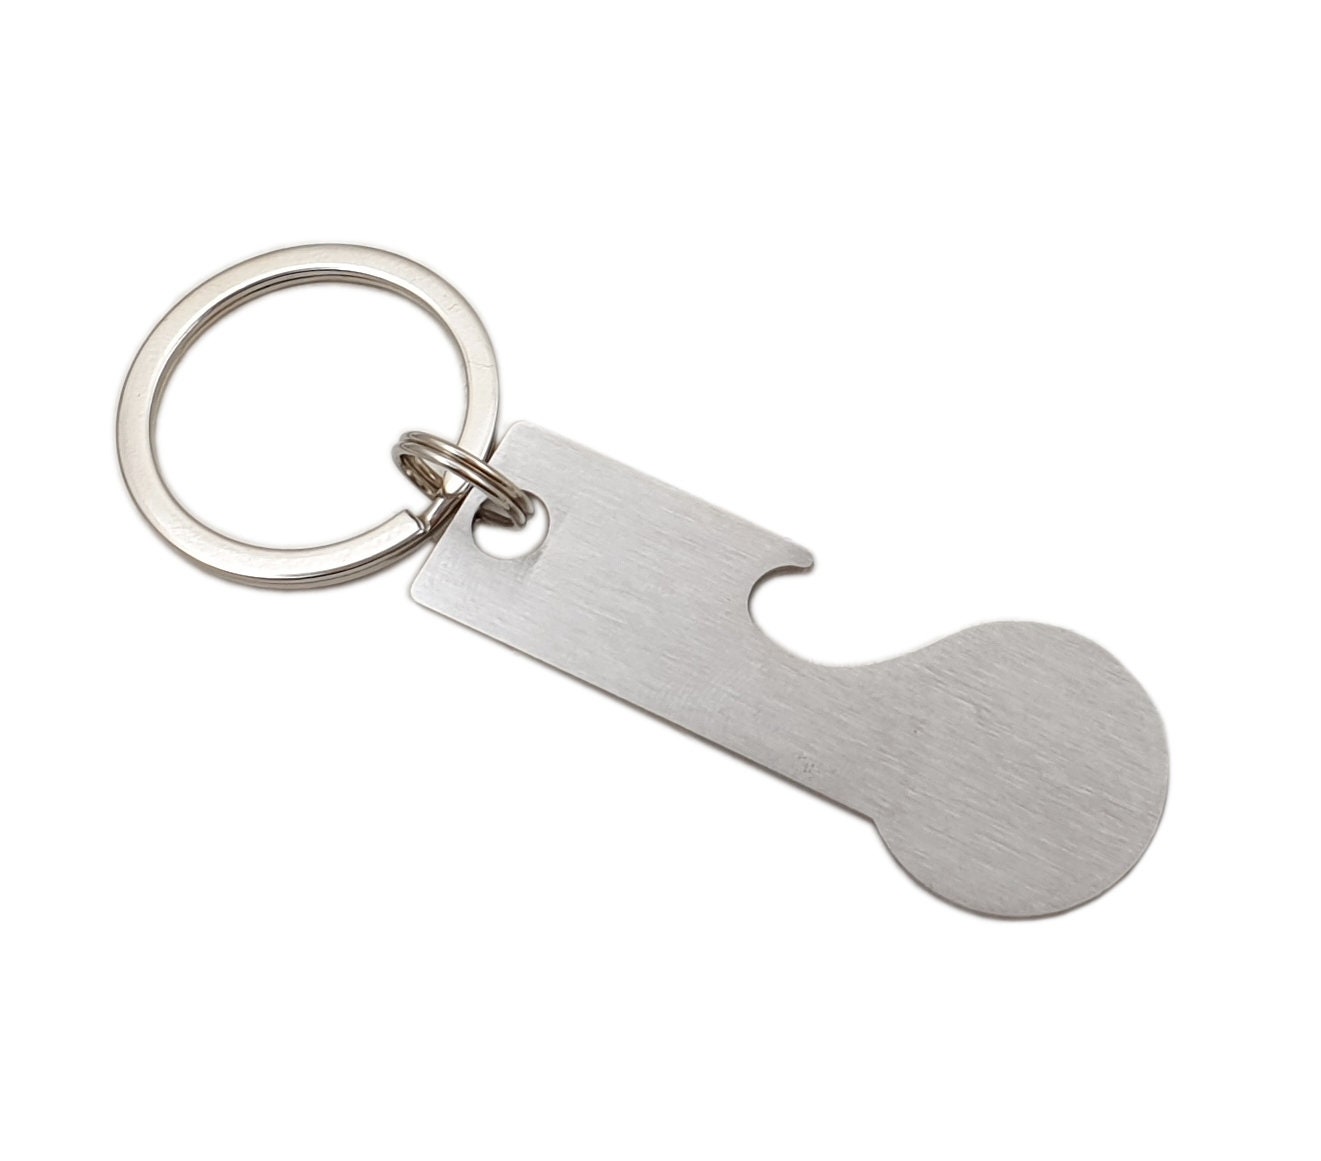 3 Stück Multifunktions Schlüsselanhänger, Flaschenöffner  Autoschlüsselanhänger, Schlüsselanhänger mit 2 Schlüsselringen,  Schlüsselanhänger zum